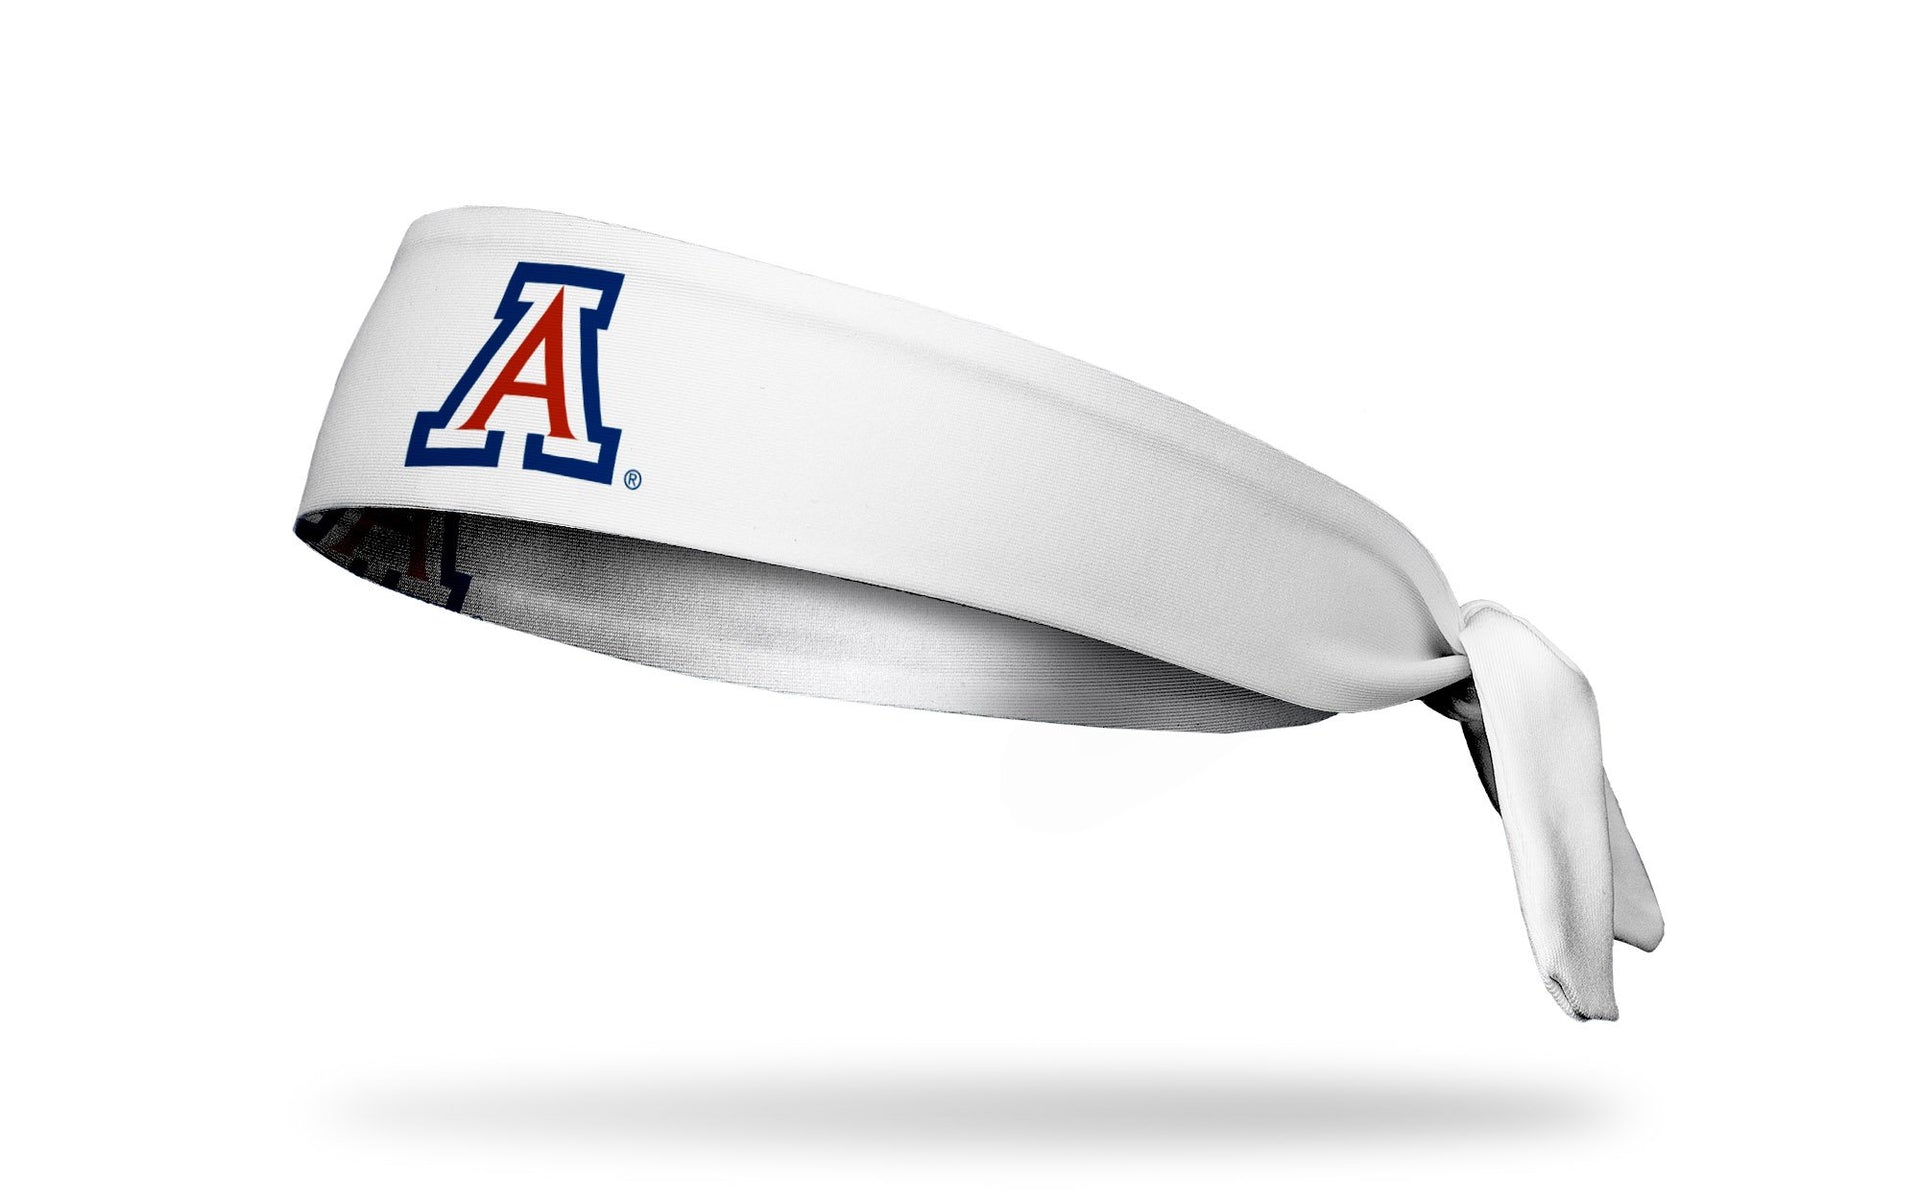 University of Arizona: A Logo White Tie Headband - View 1